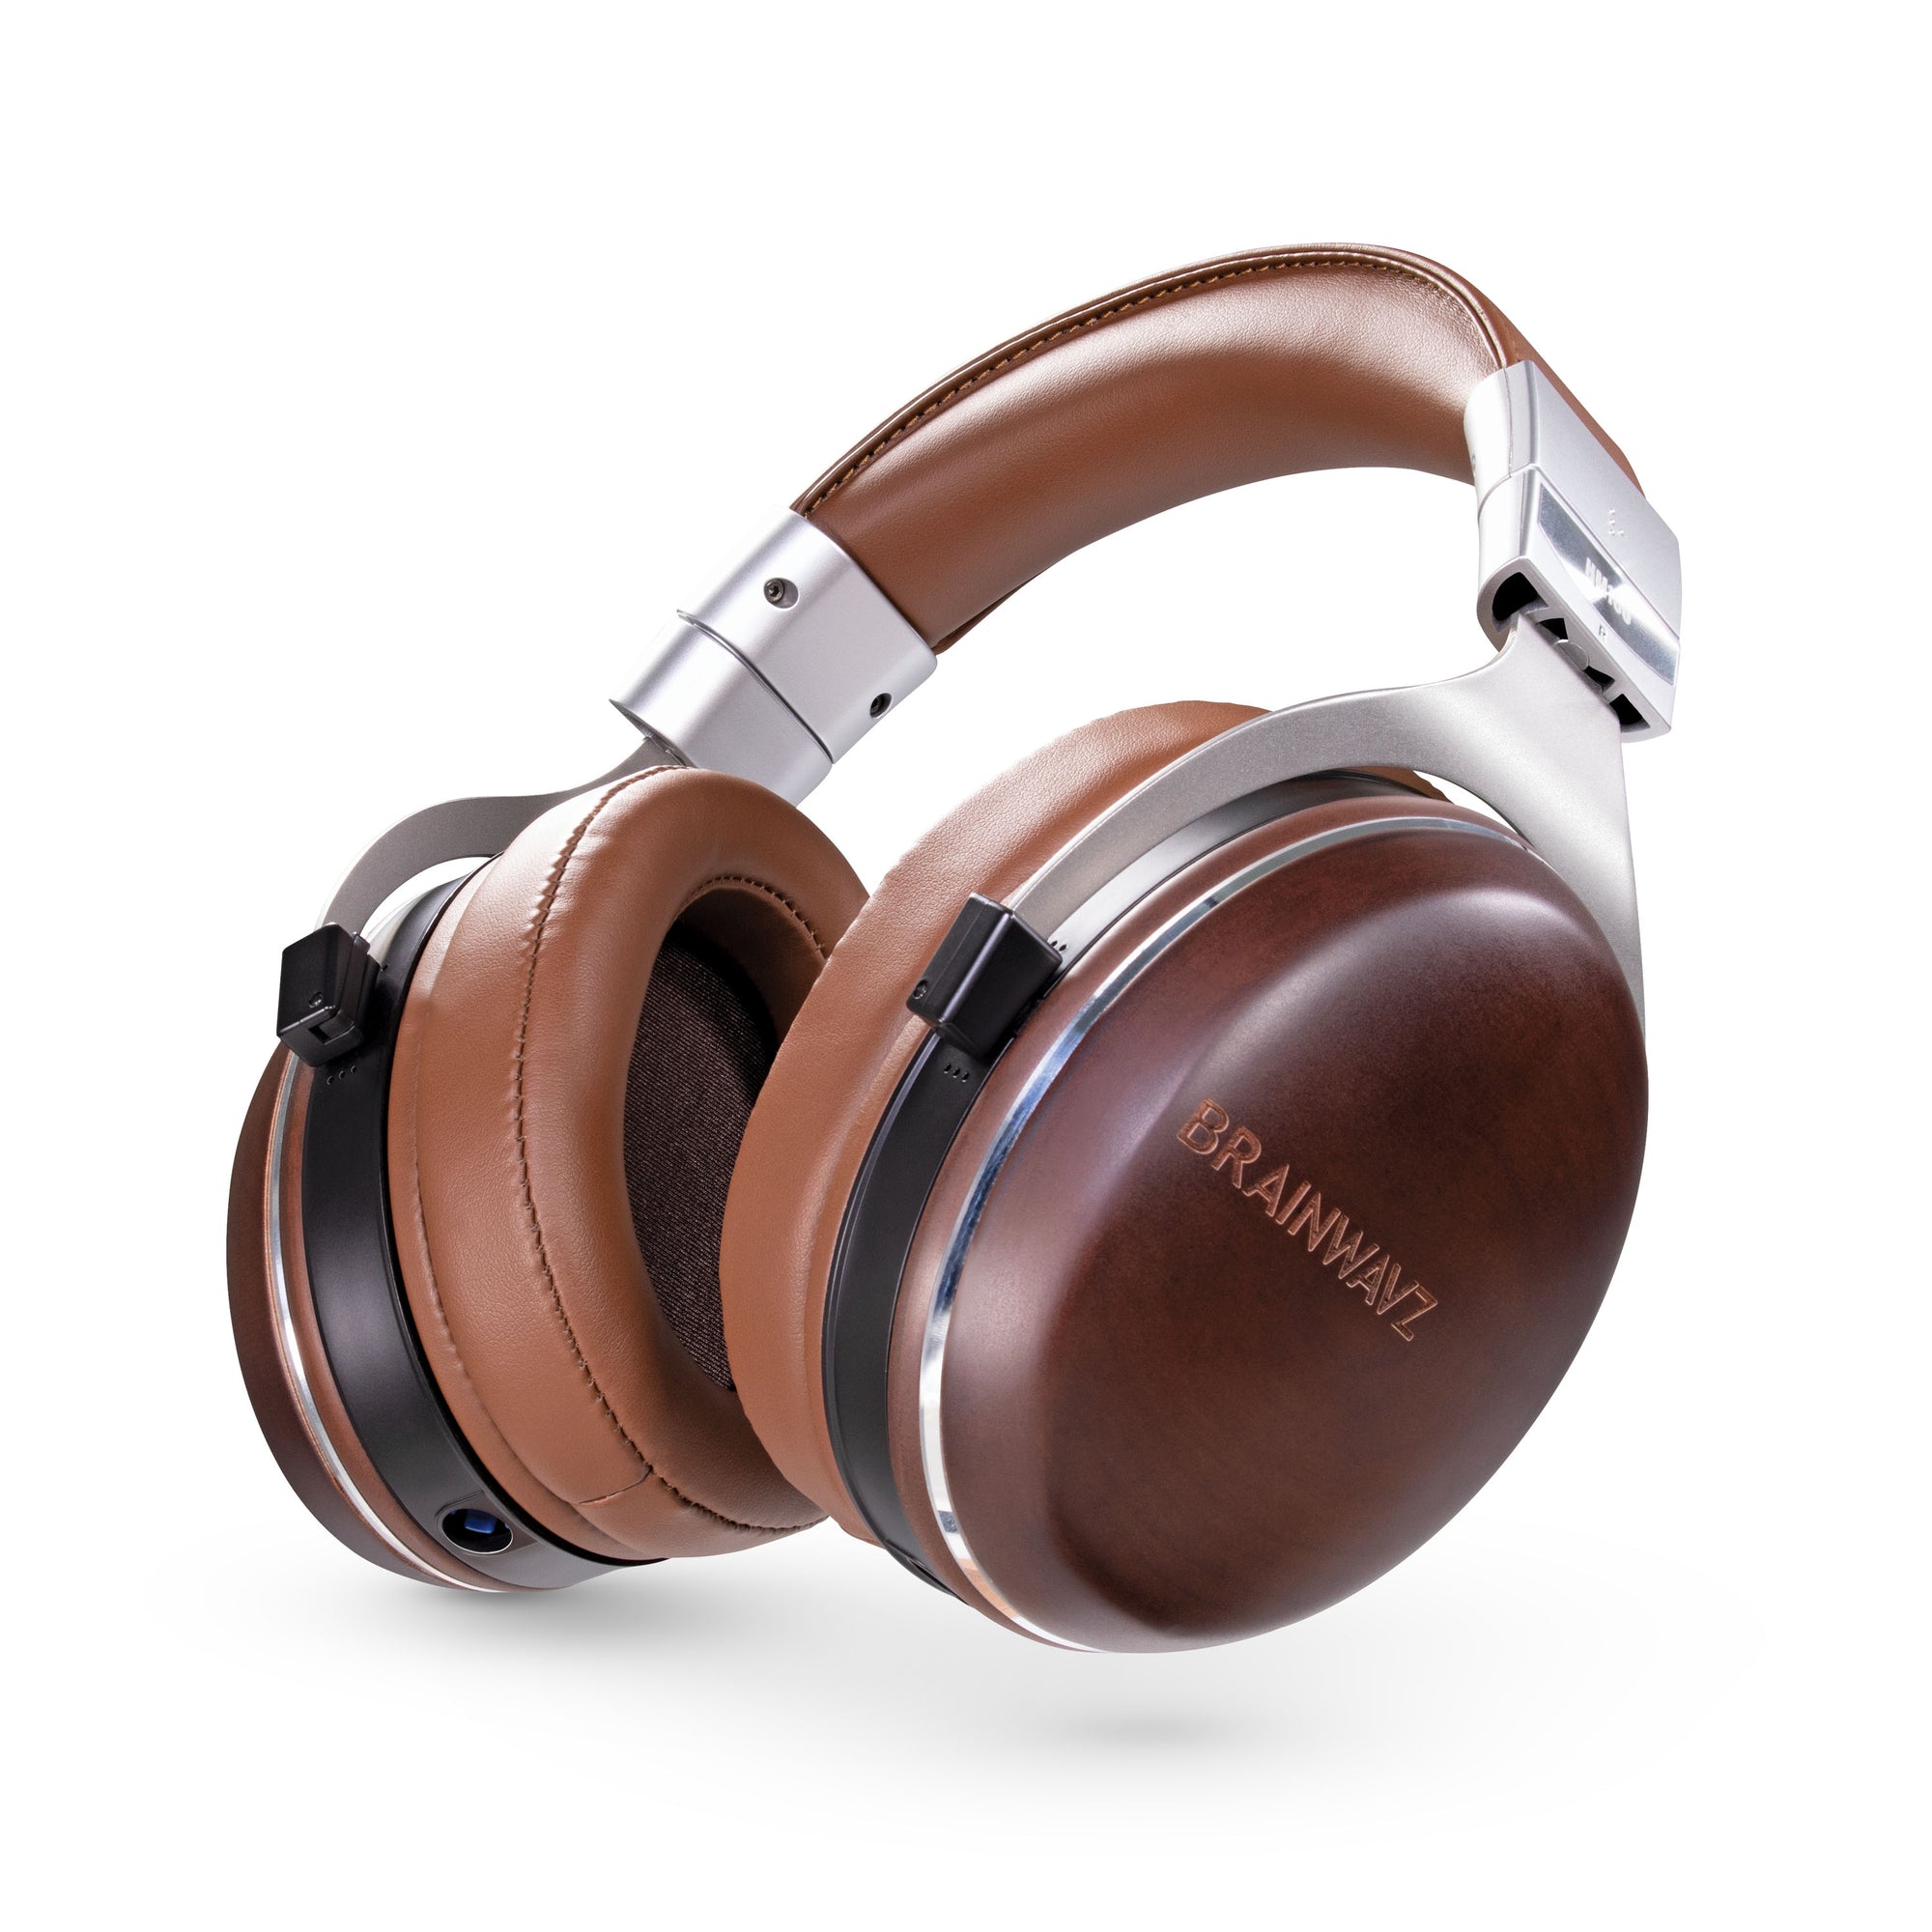 HM100 - Studio Monitor Headphones with wood earcups